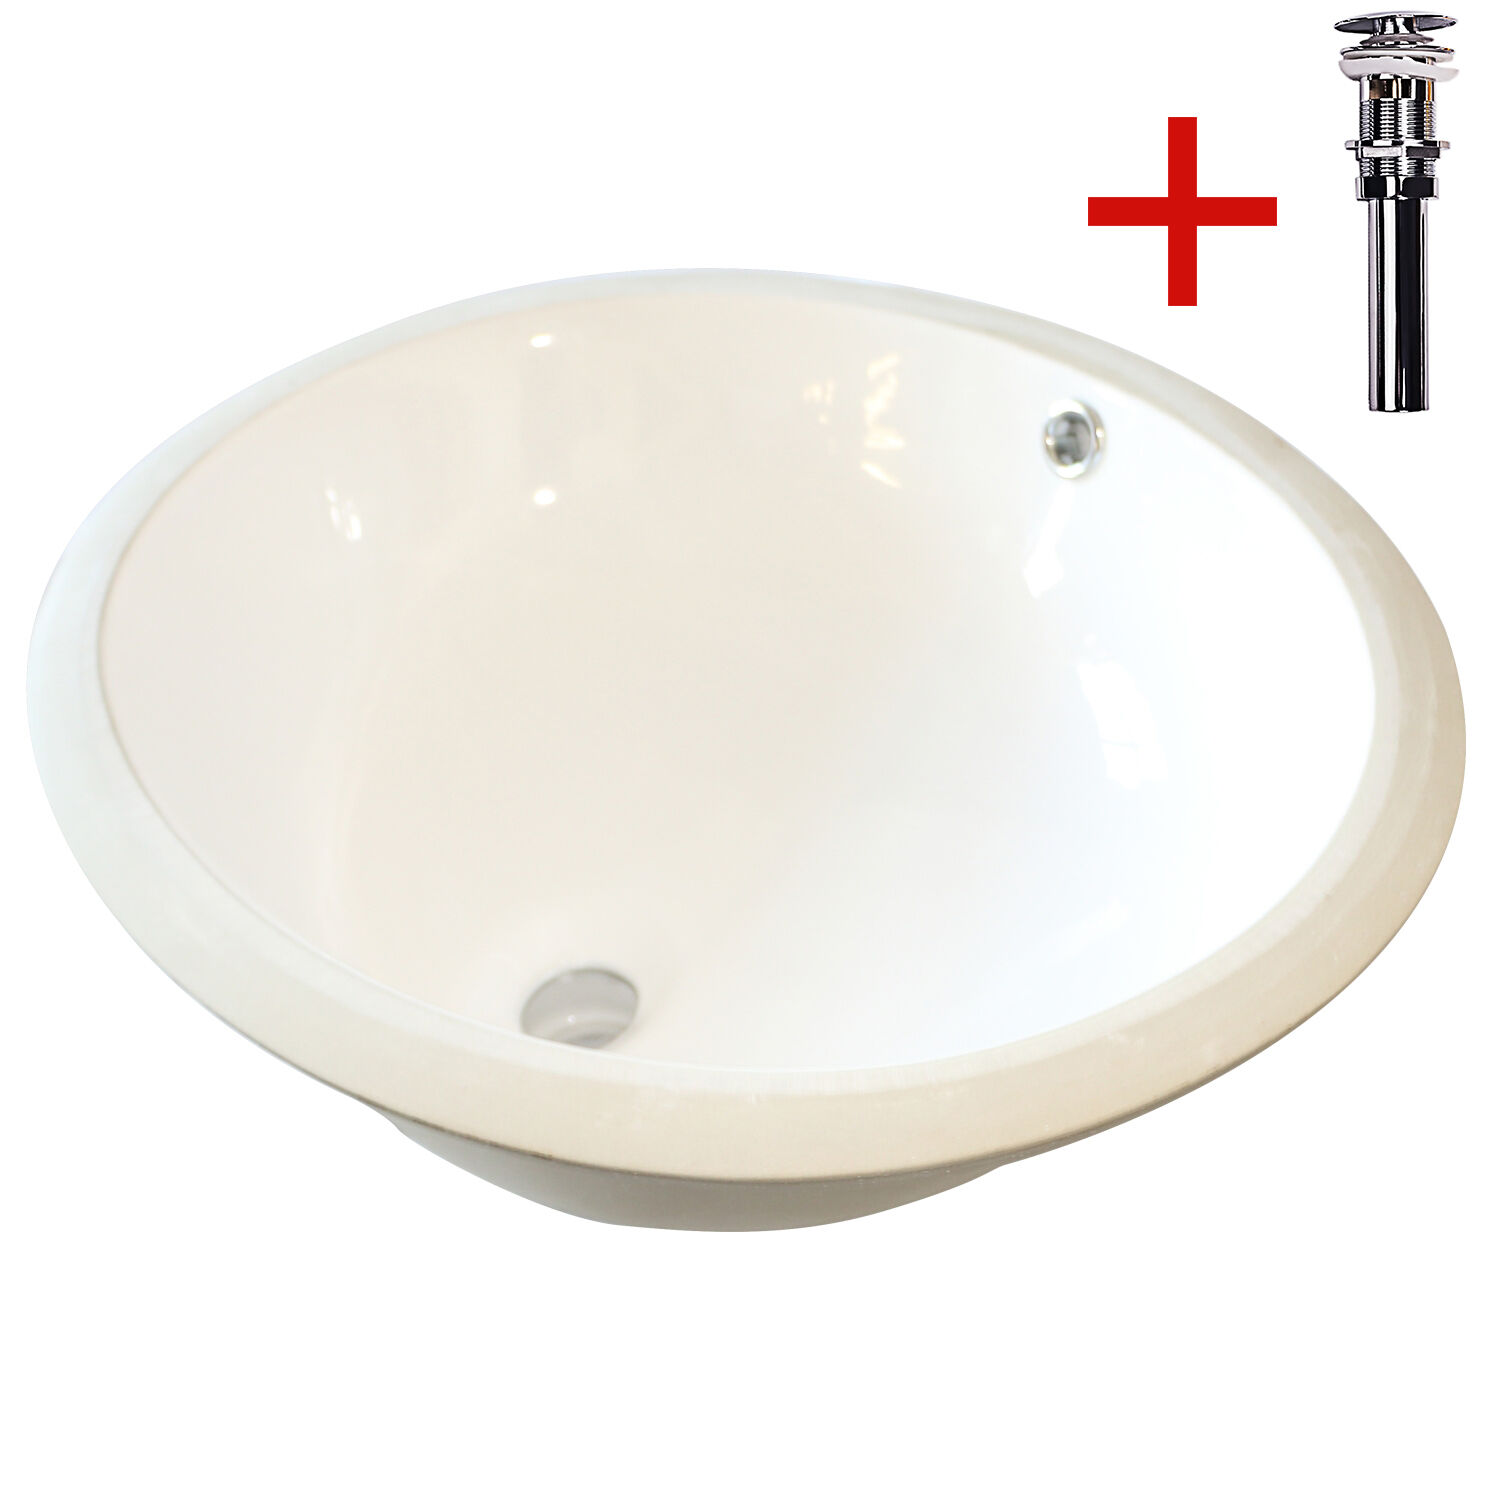 Details About Egg Bowl Sink Undermount Bathroom Porcelain Make Up W Drain Overflow White